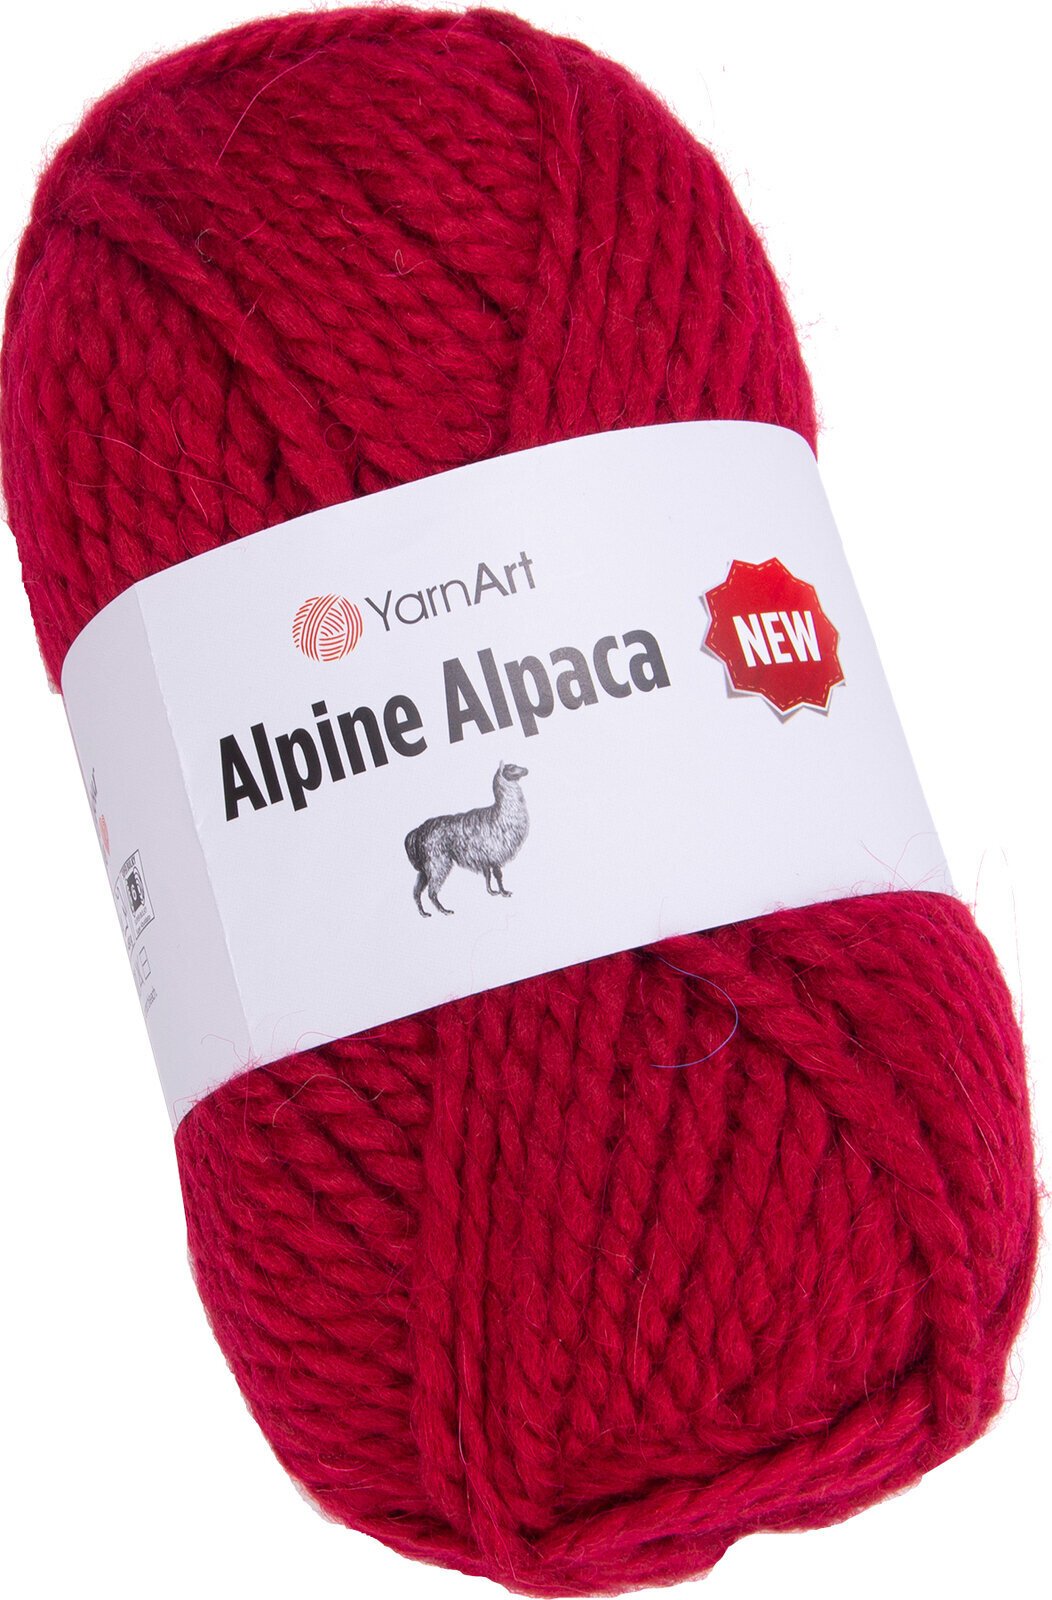 Knitting Yarn Yarn Art Alpine Alpaca New 1434